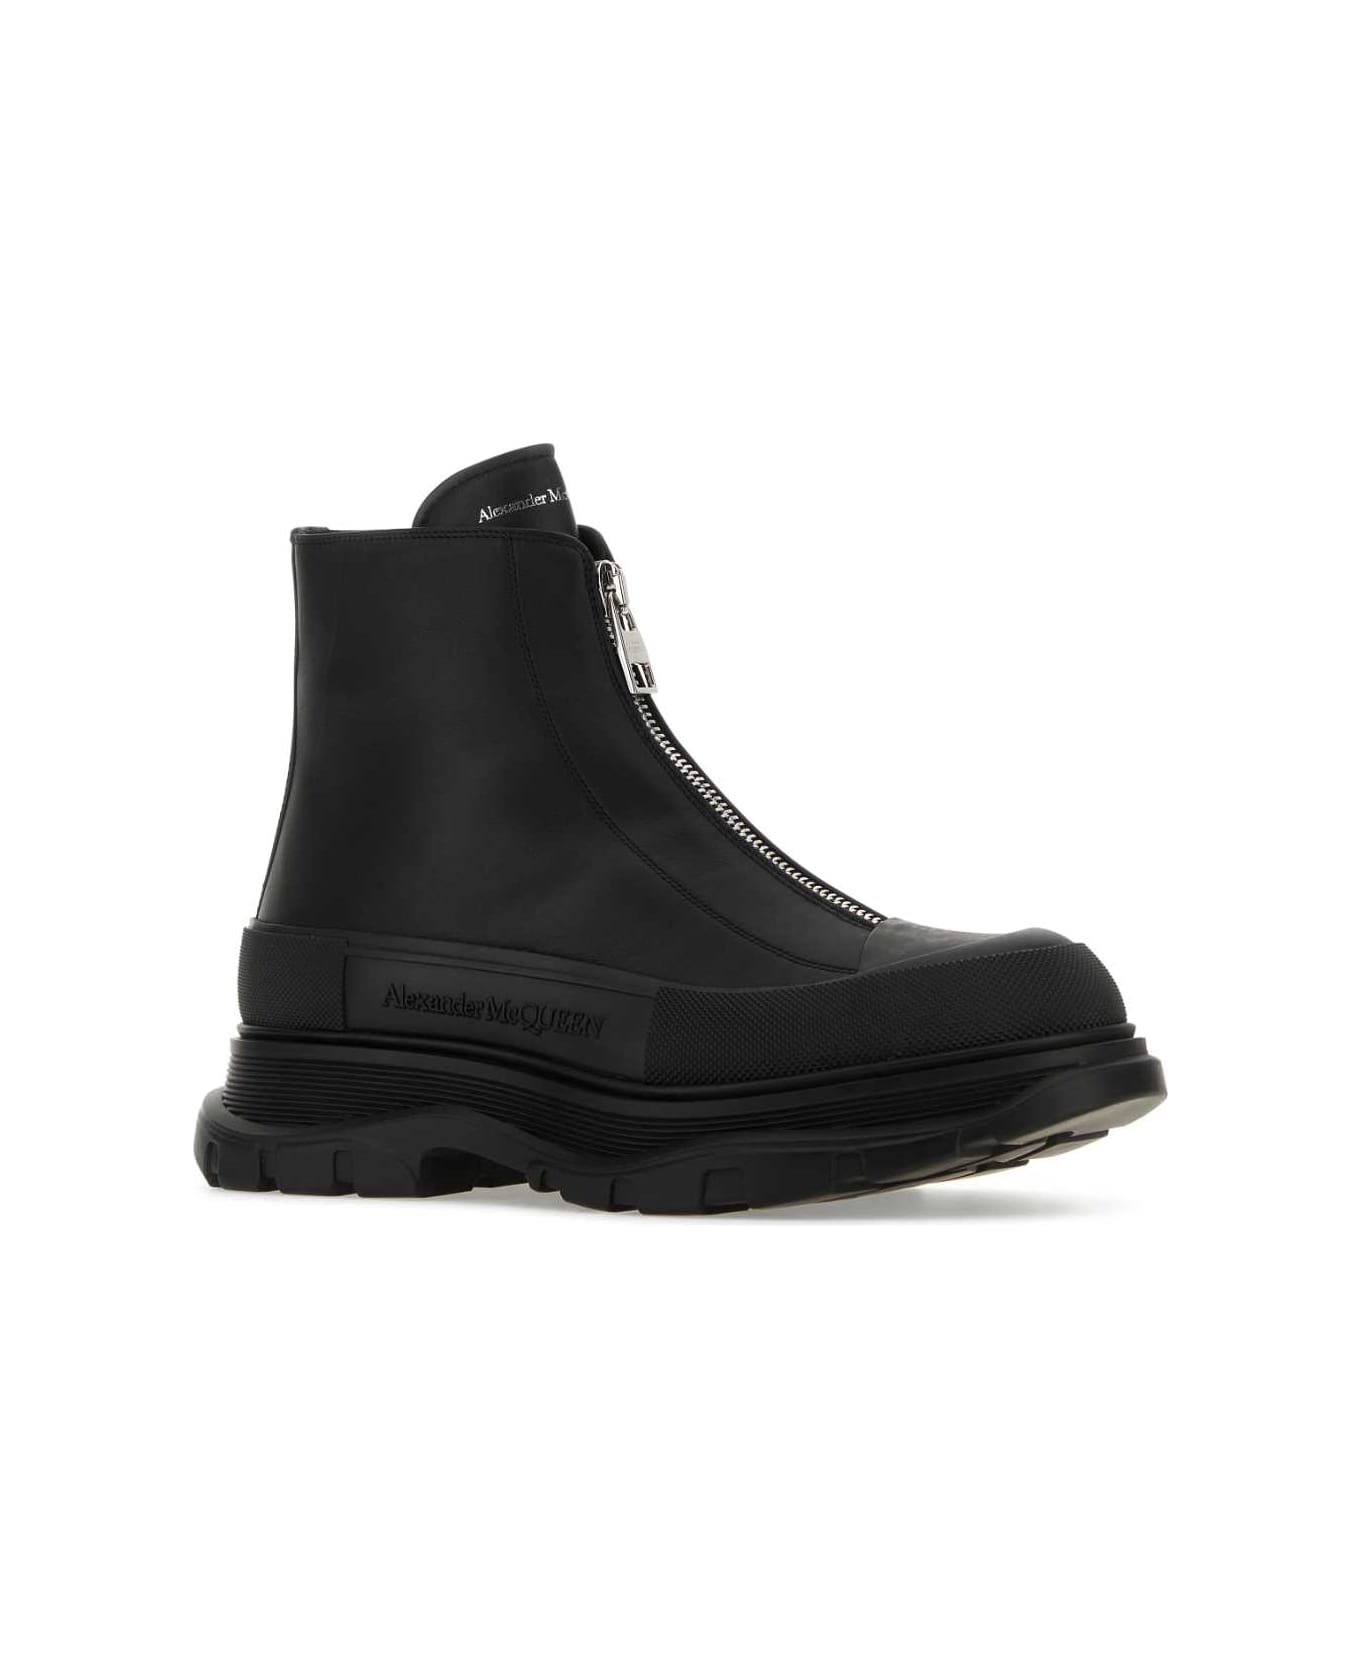 Alexander McQueen Black Leather Ankle Boots - BLACK/BLACK